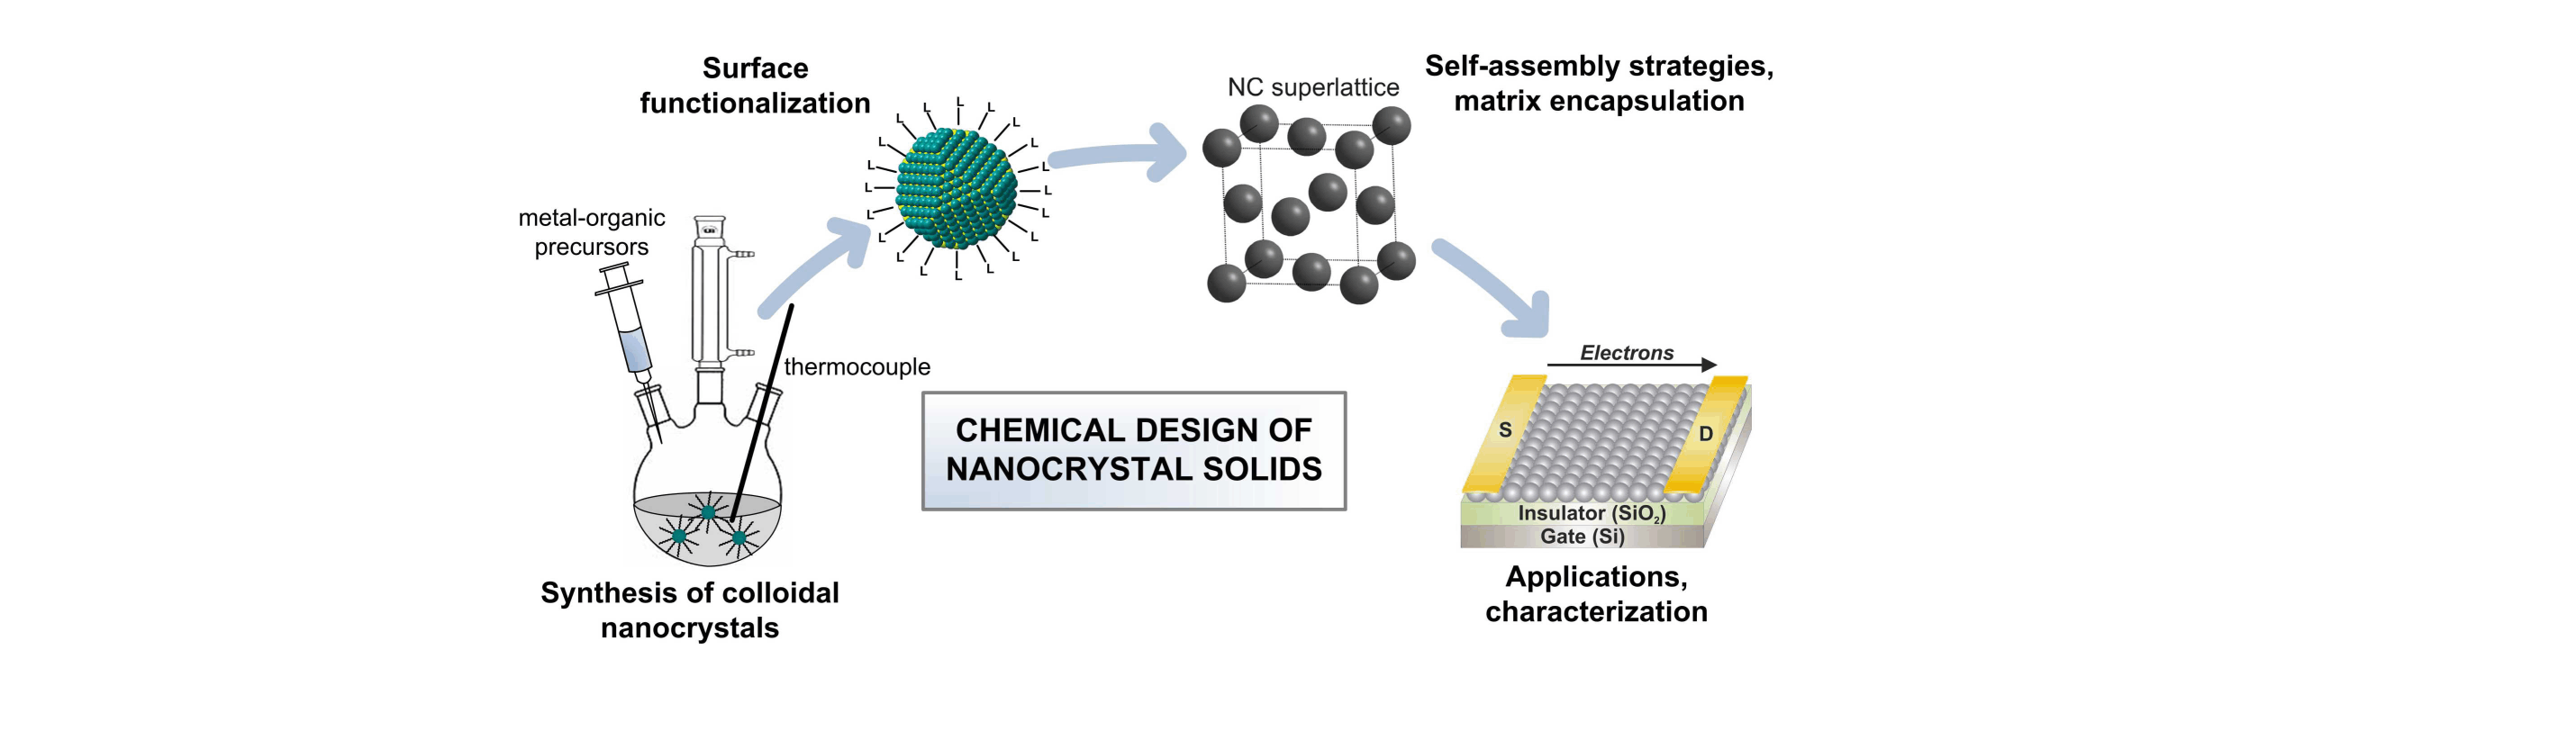 Chemical Design of Nanocrystal Solids